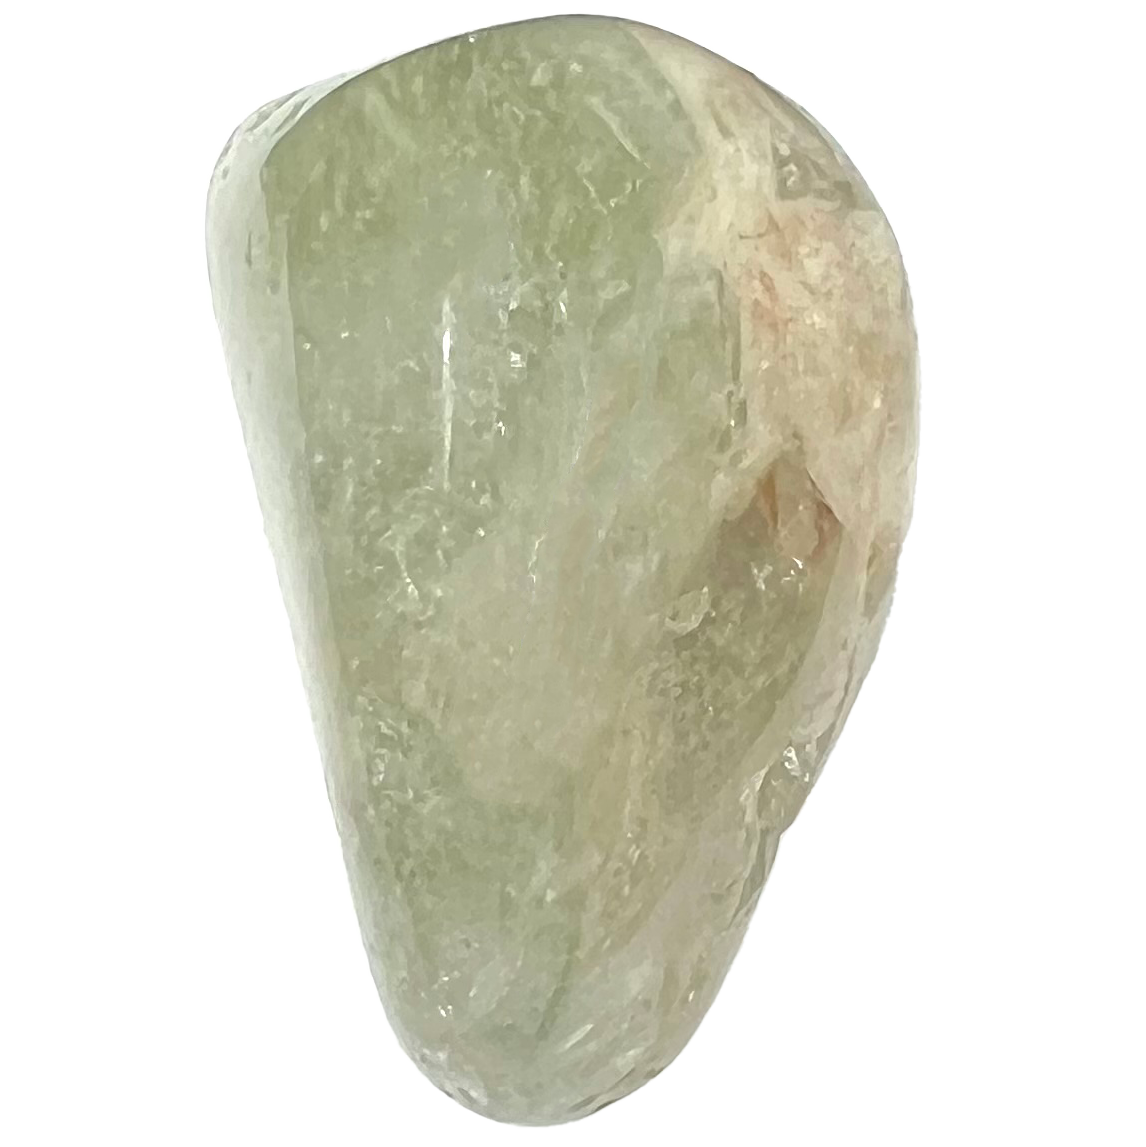 A tumbled prasiolite quartz stone.  The stone is faint light green and transluscent.